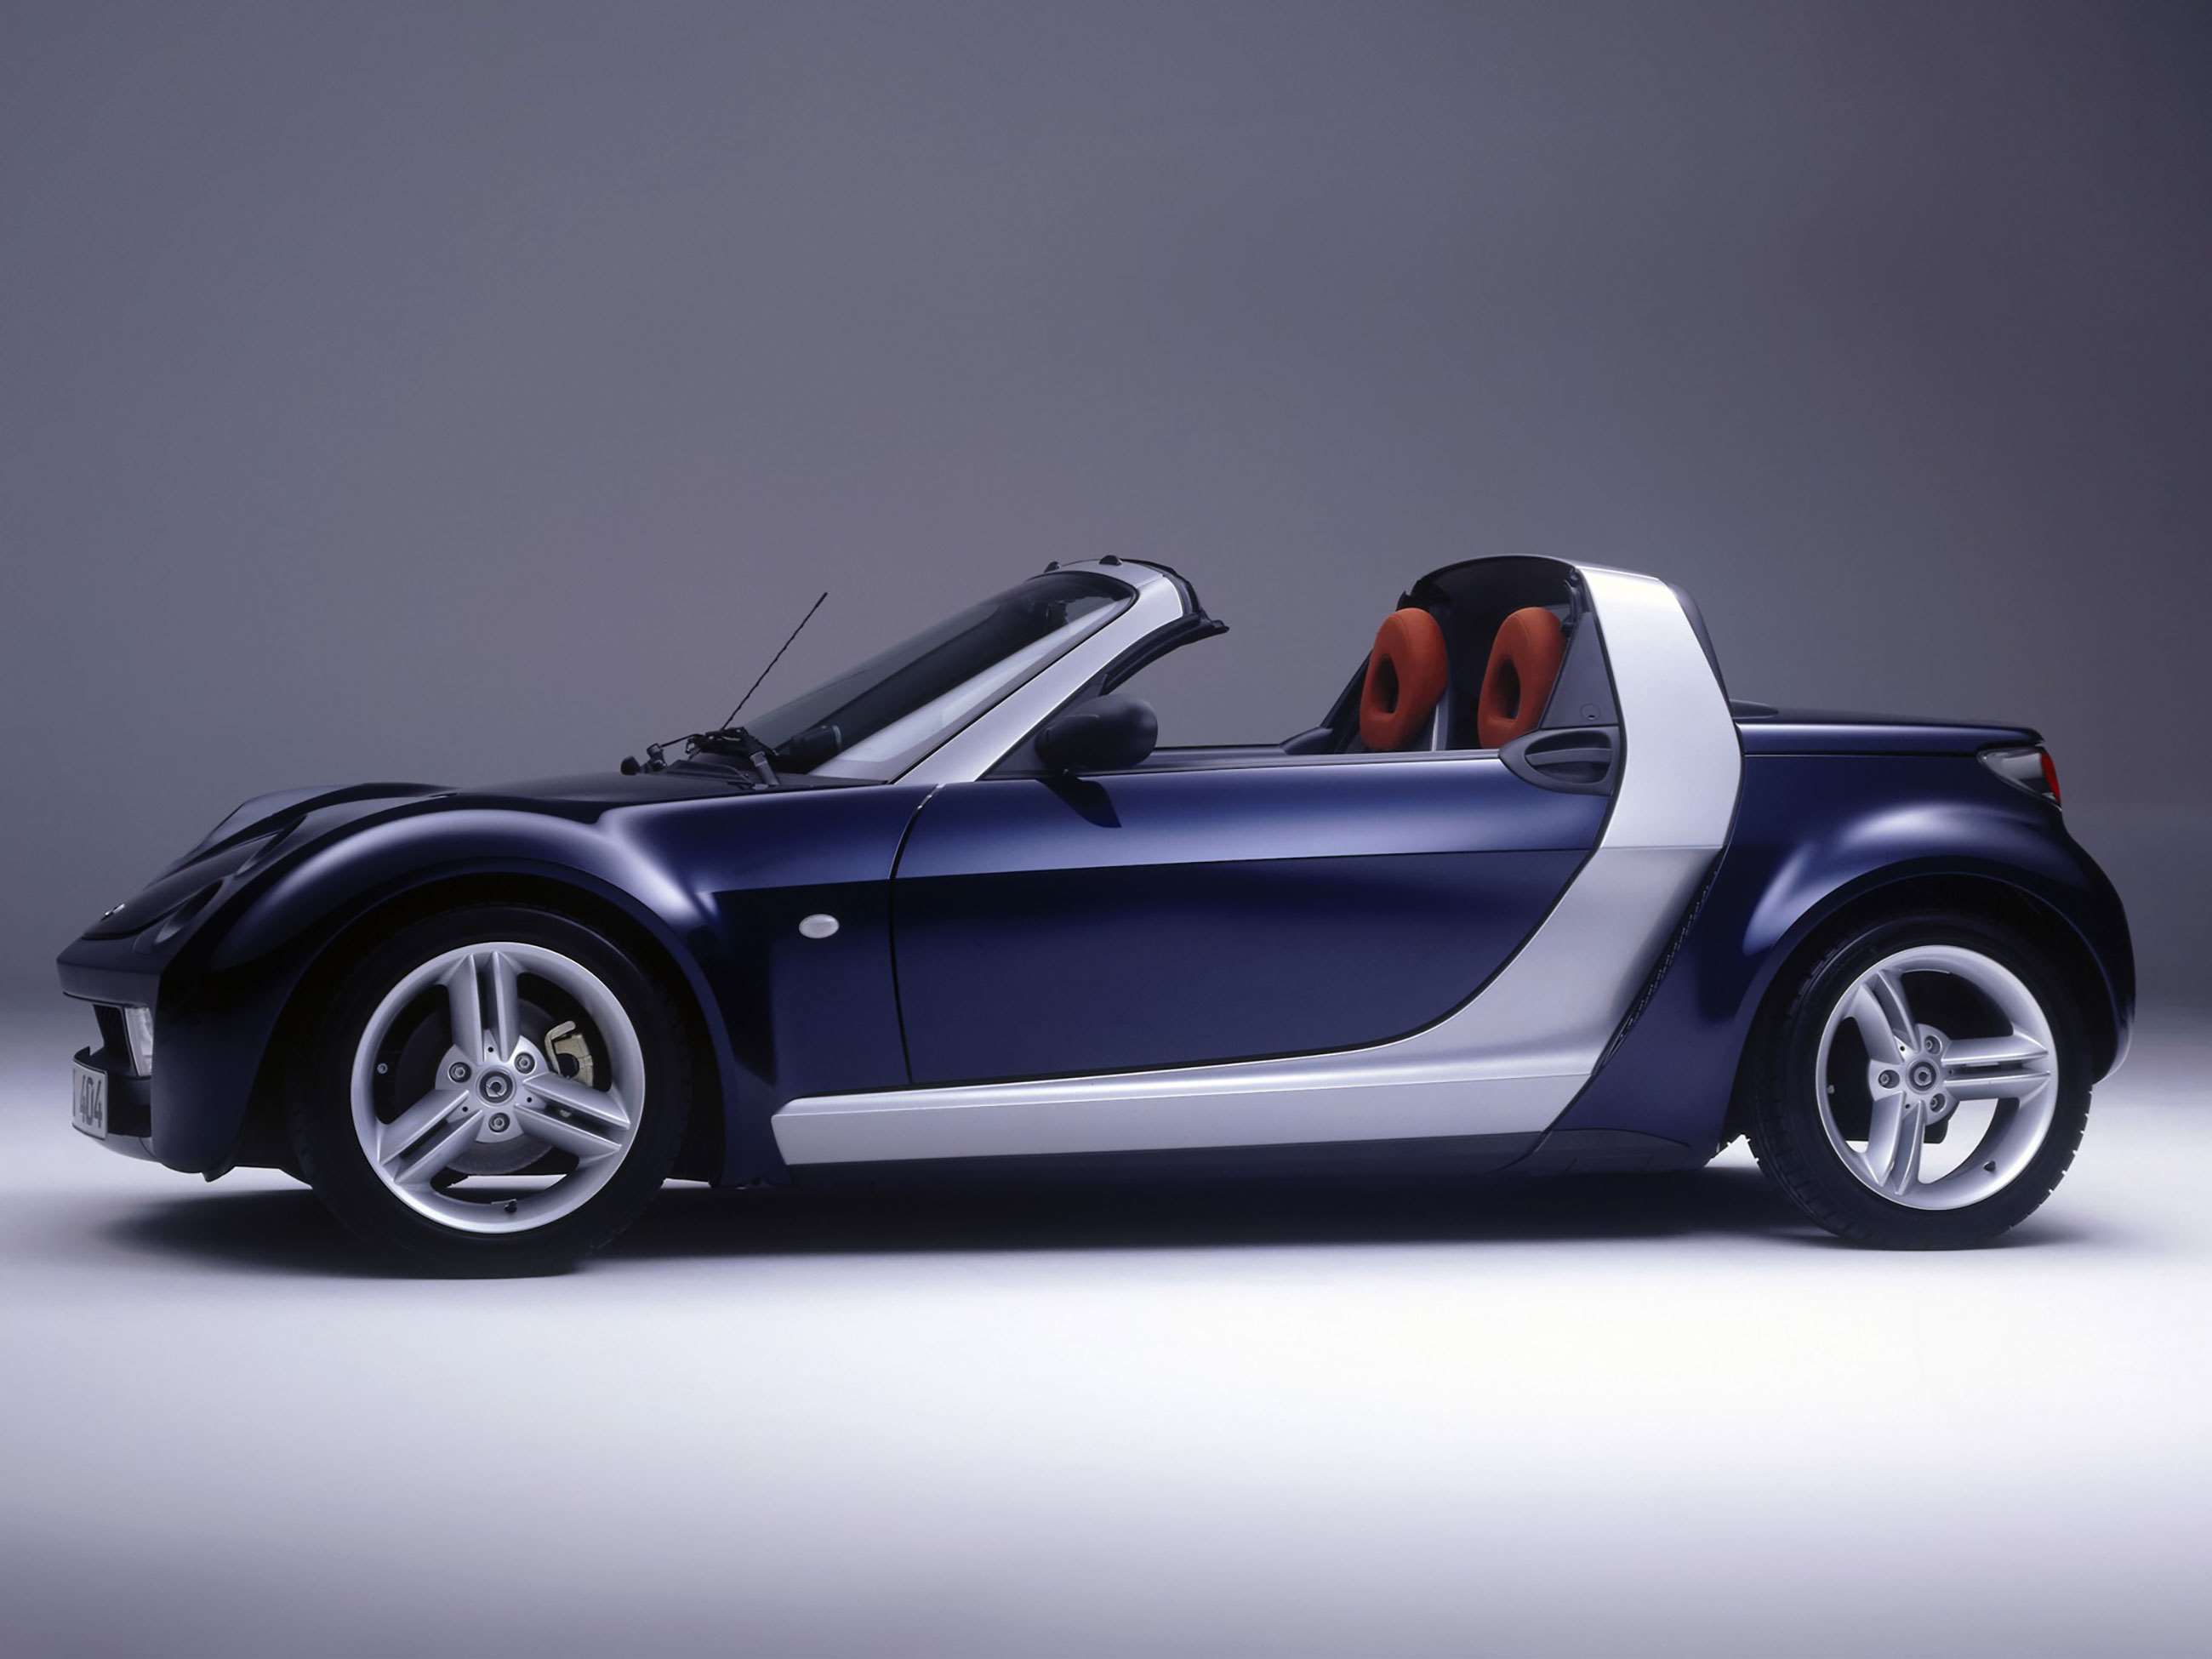 best-three-spoke-alloy-wheels-4-smart-roadster-saab-9-5-goodwood-02072020.jpg